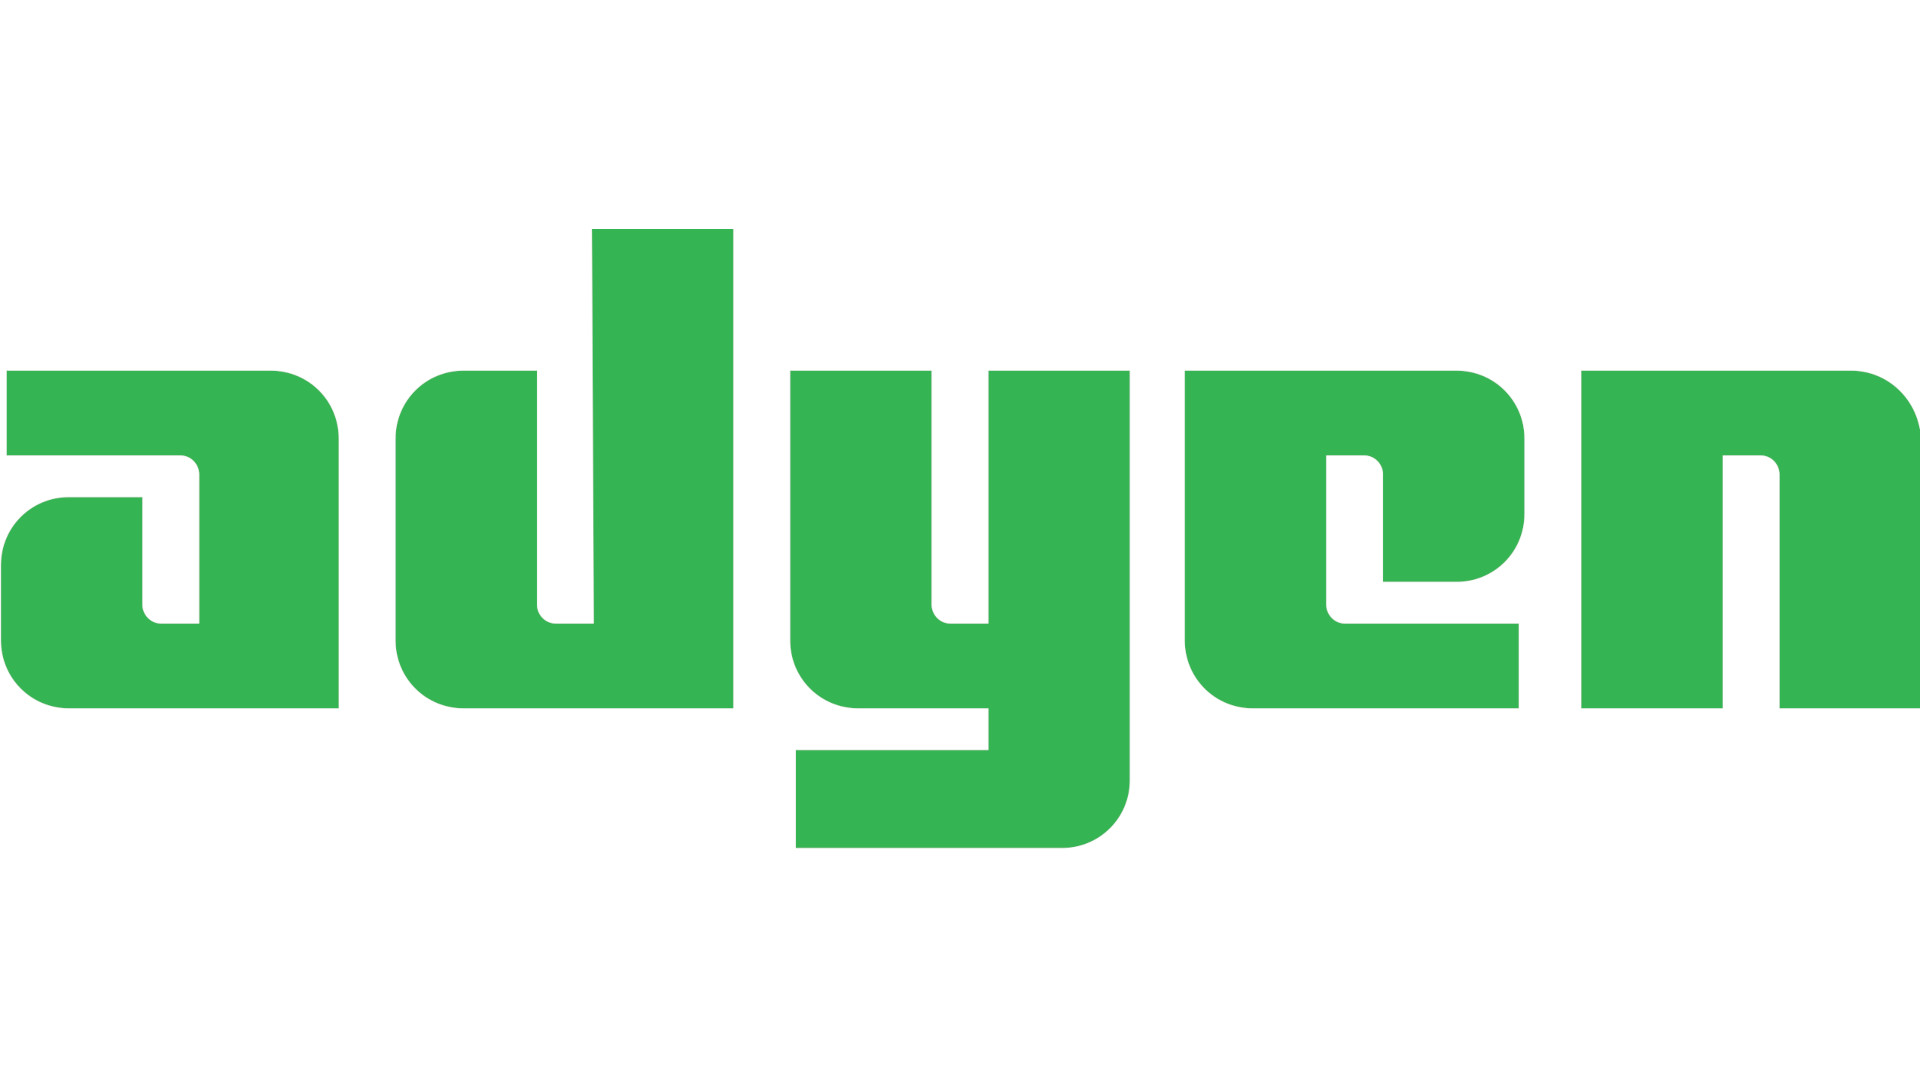 Adyen Logo